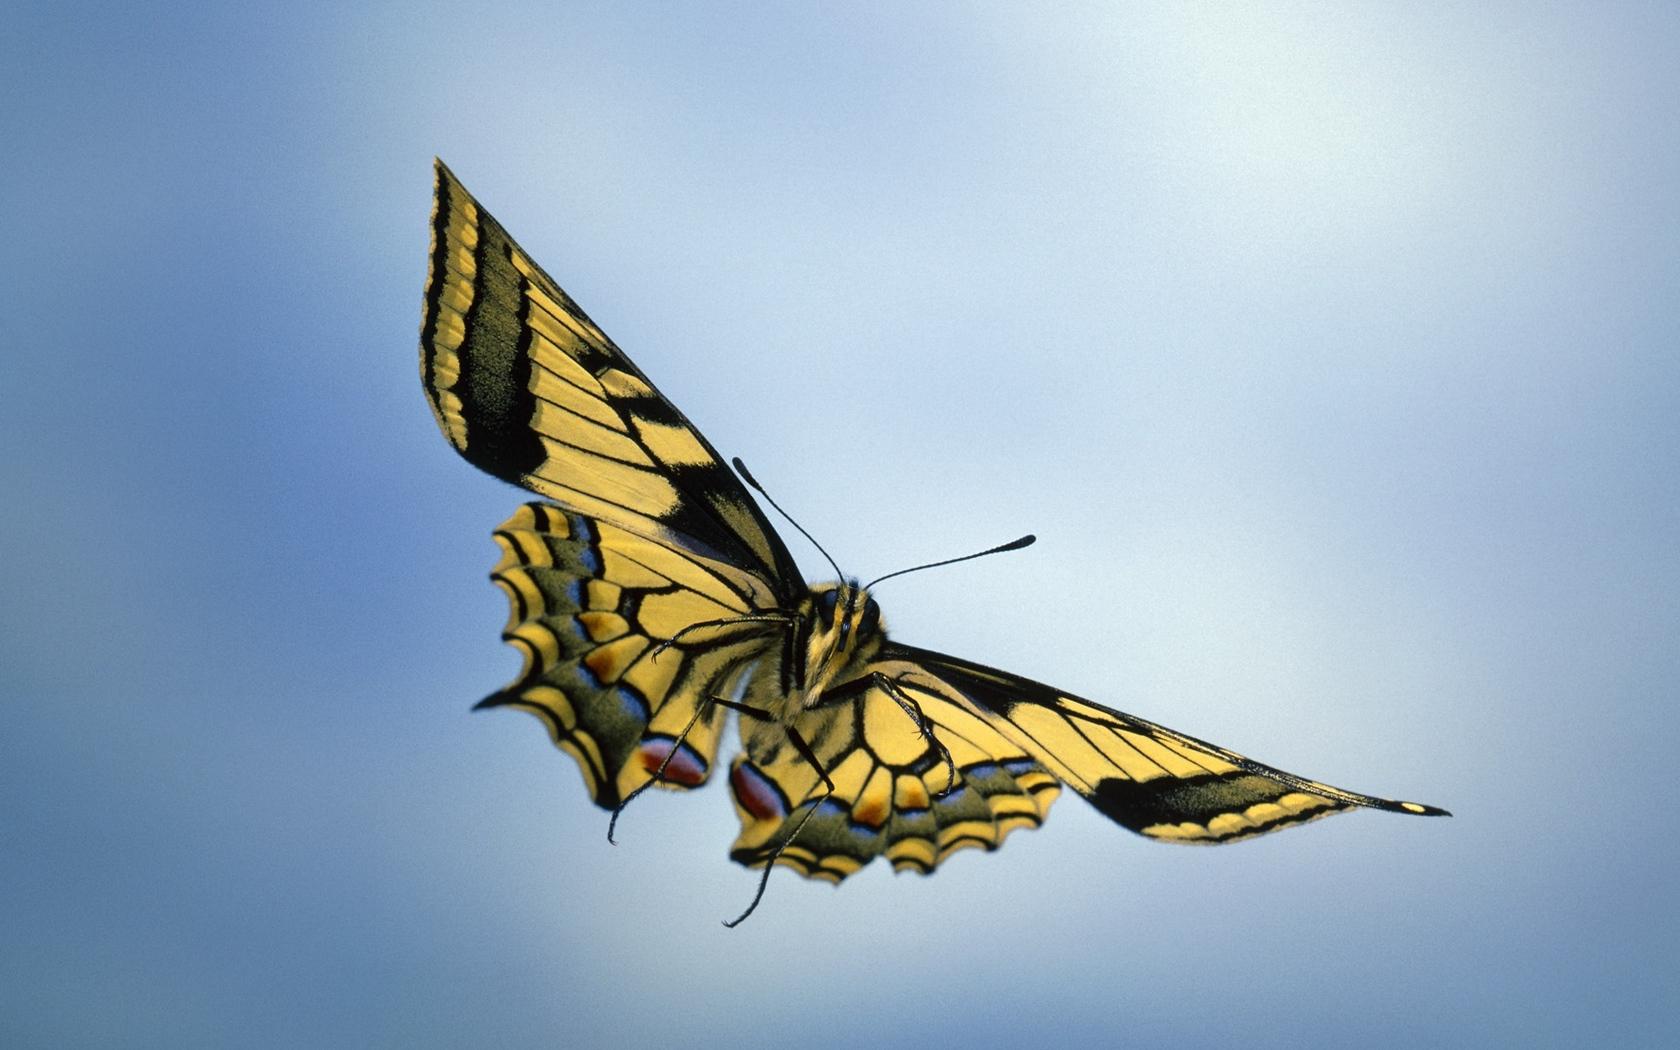 Download wallpaper 1680x1050 butterflies, flying, background